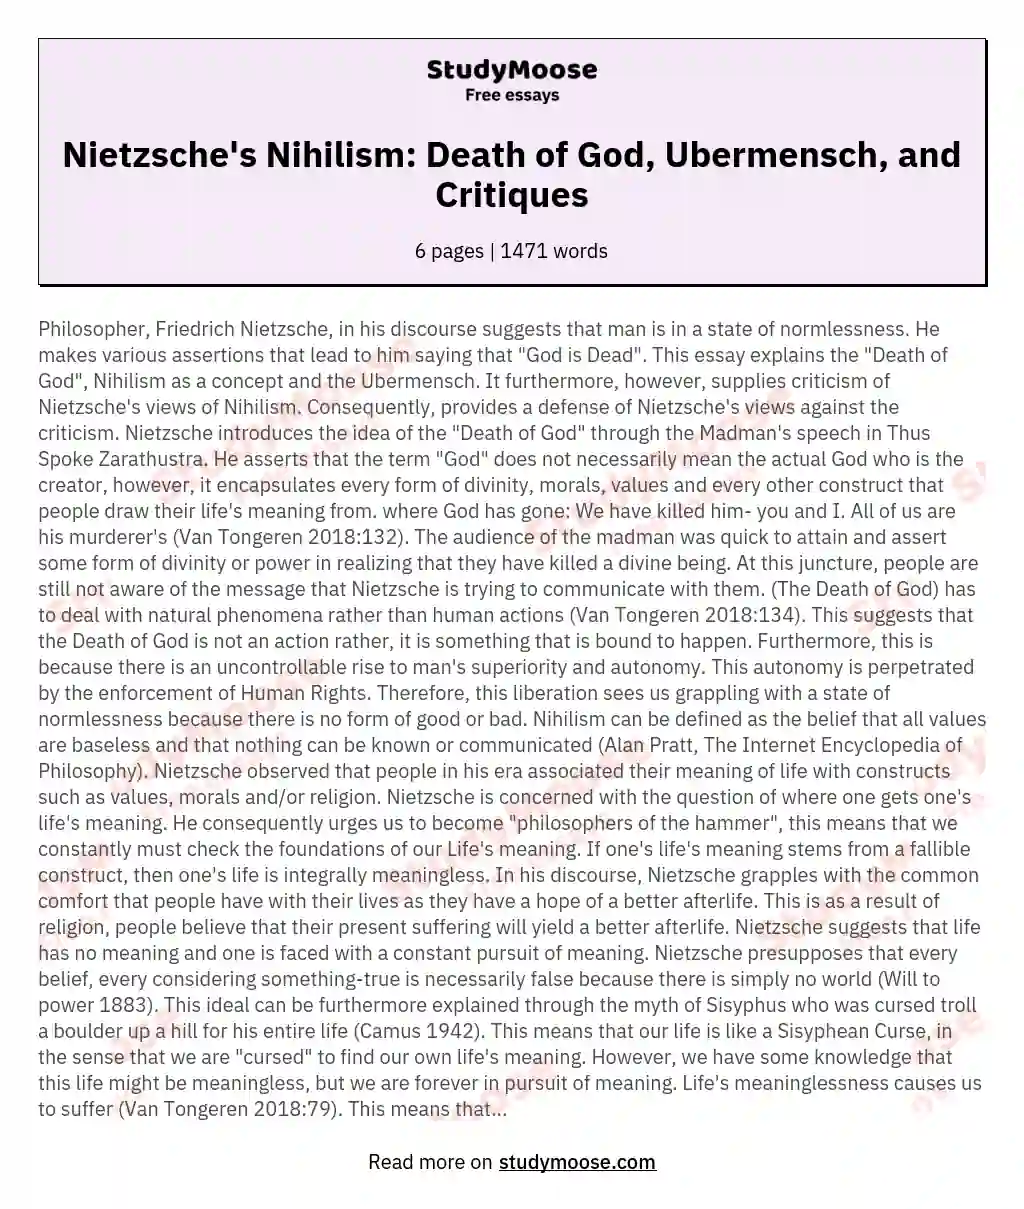 Nietzsche's Nihilism: Death of God, Ubermensch, and Critiques essay